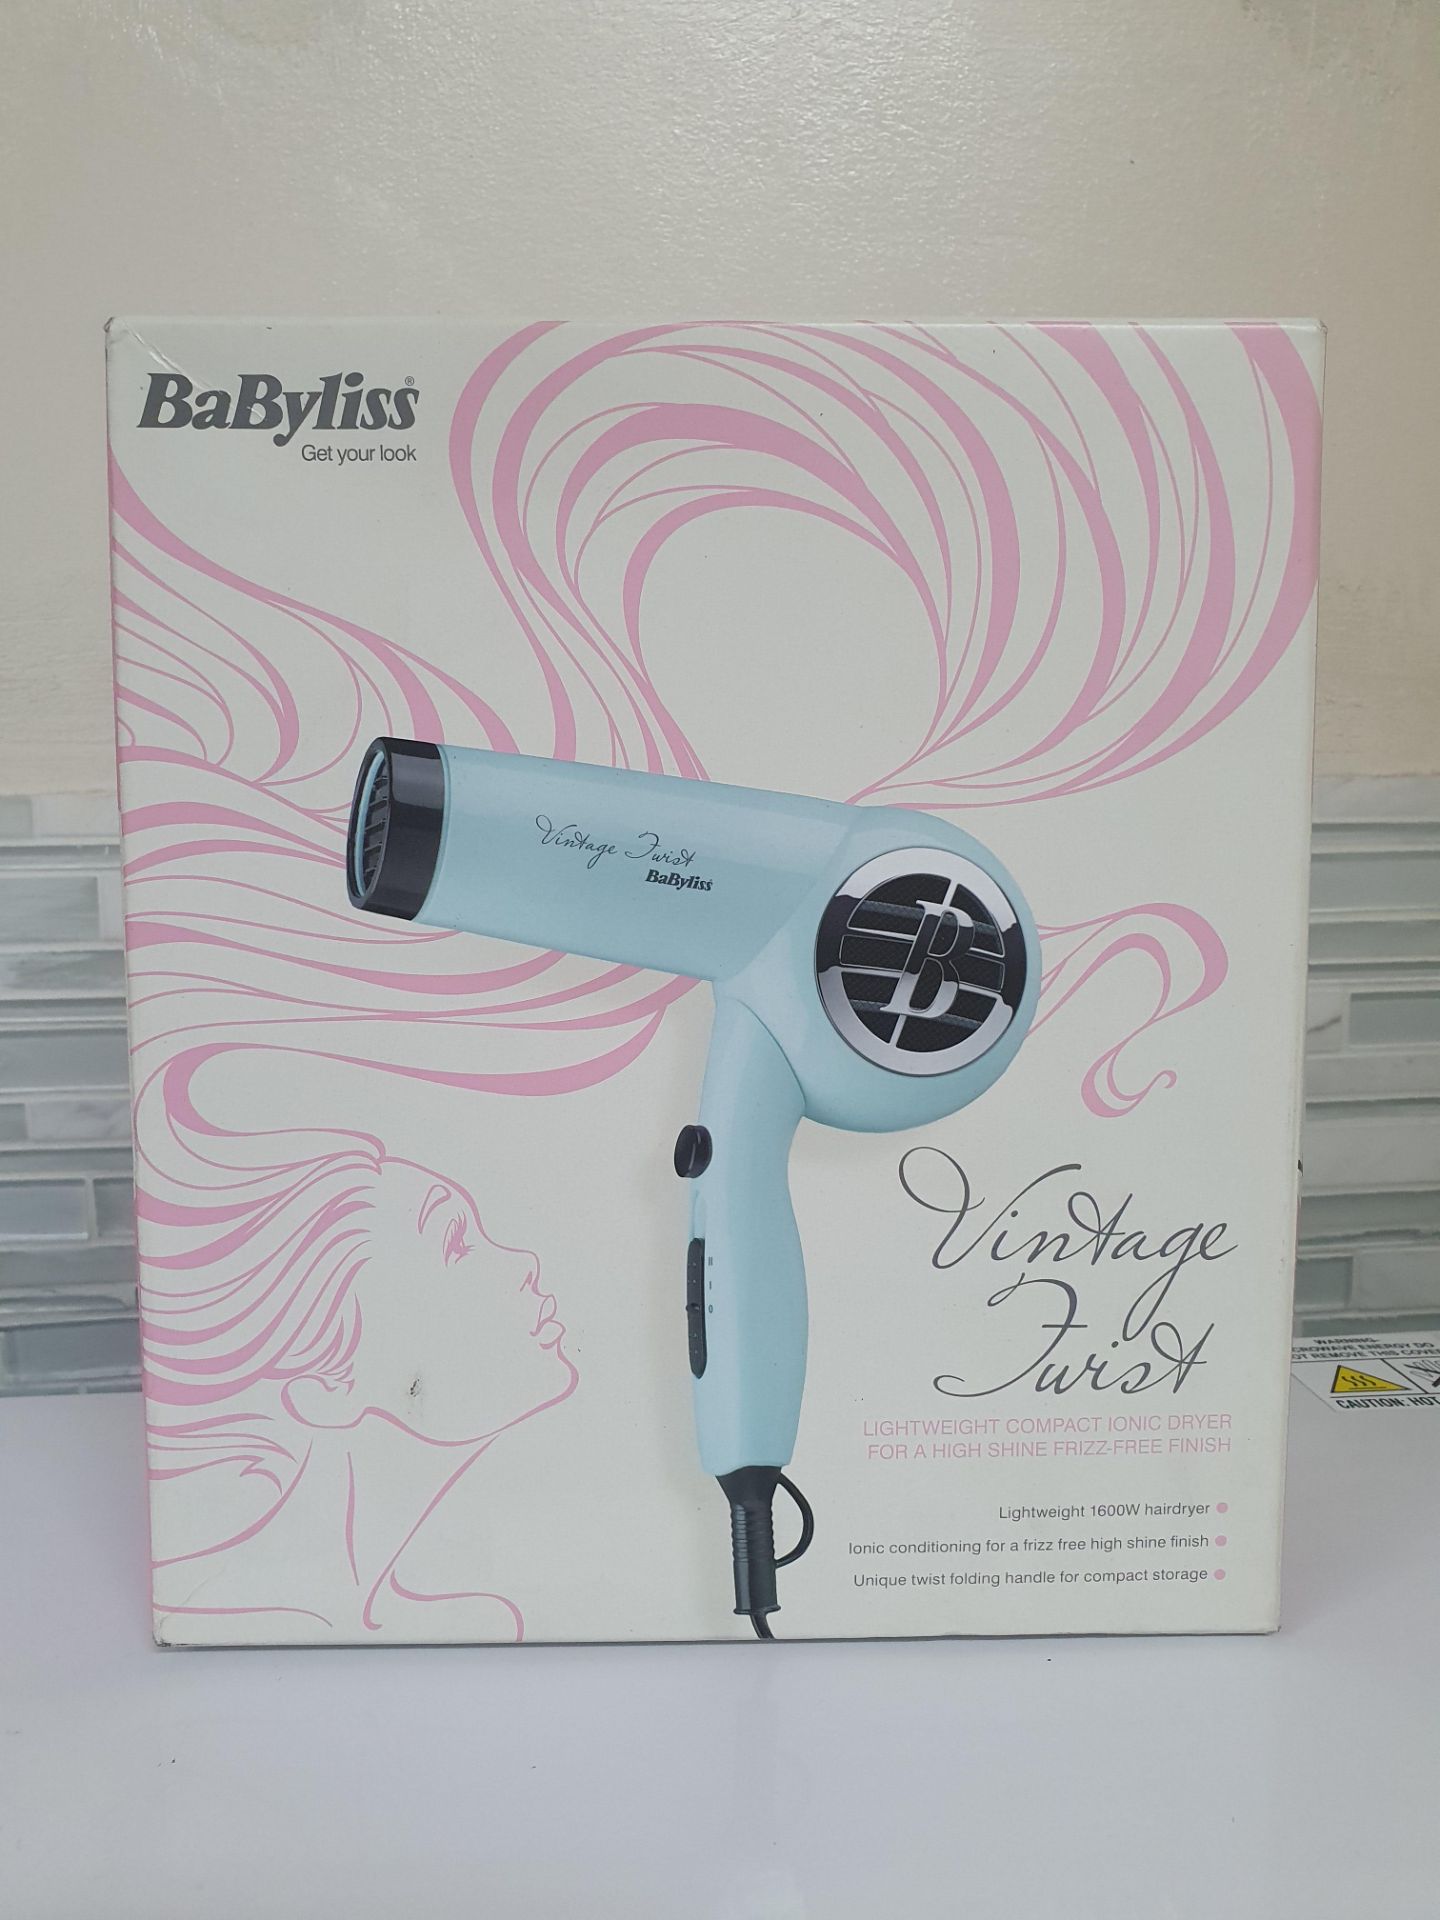 new babyliss vintage twist hair dryer 5900cu rrp £39.99